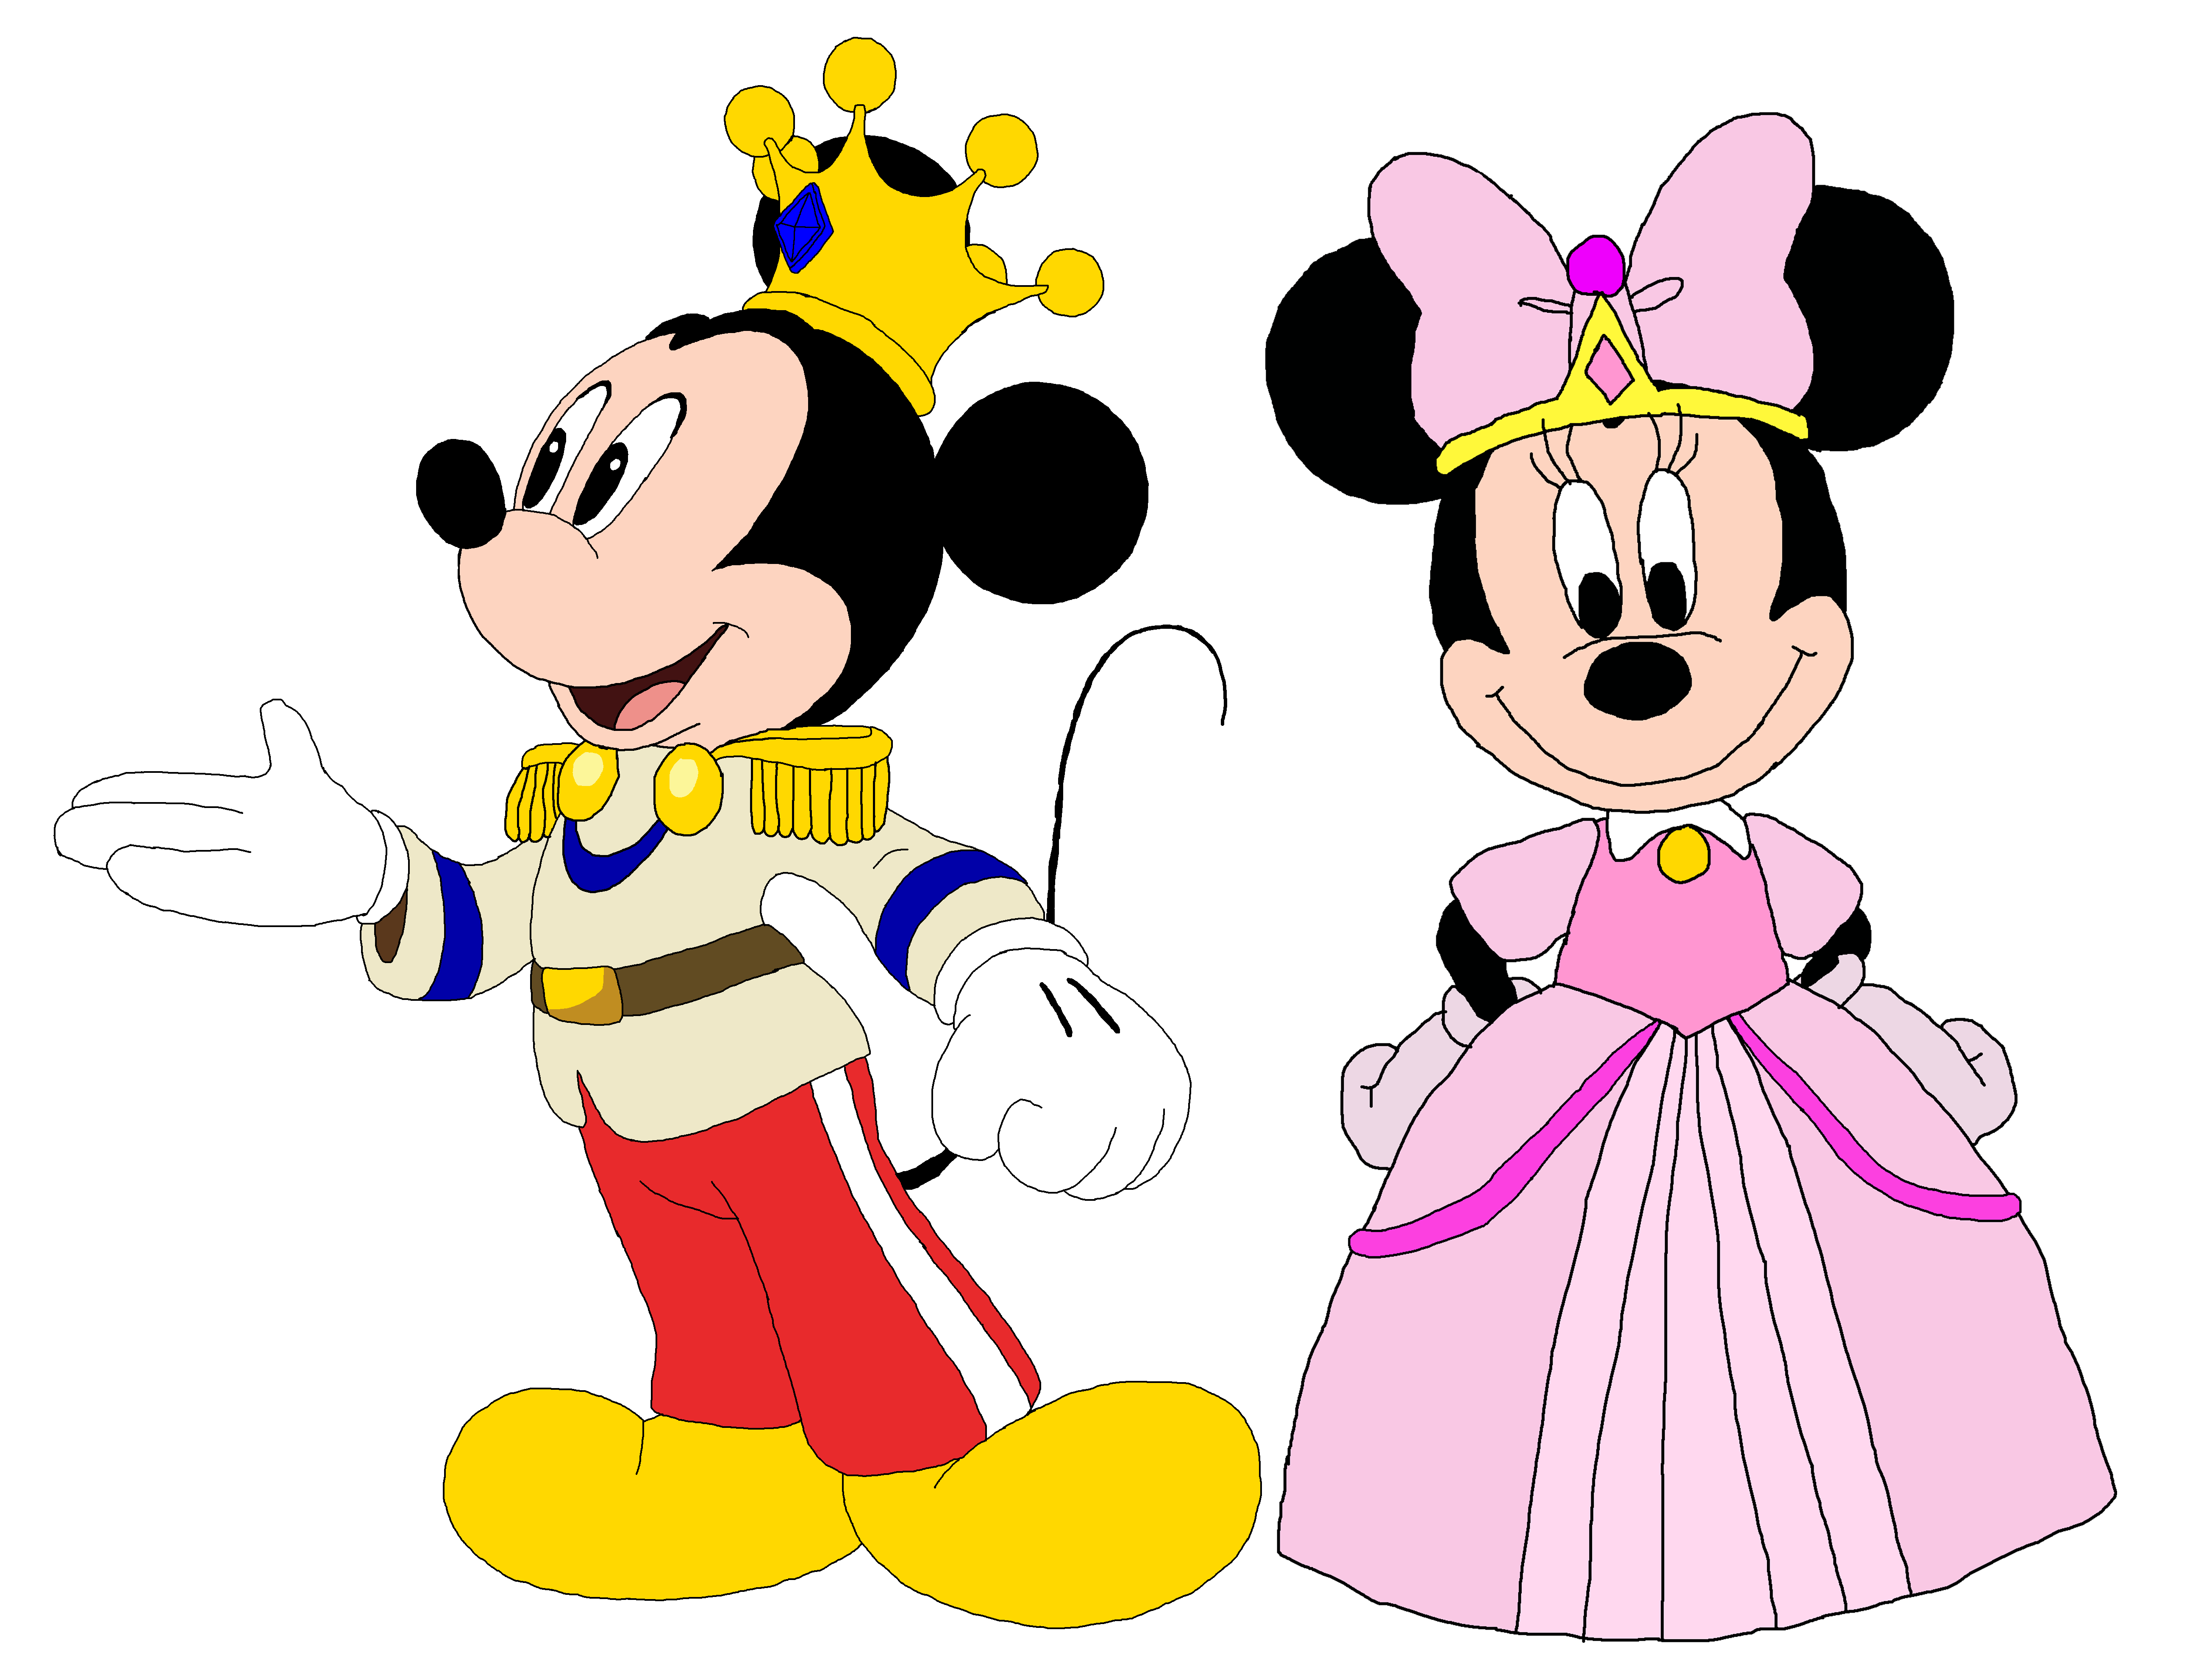 Минни группа. Микки Маус и Минни Маус принц и принцесса. Принц Микки. Клуб Микки Мауса принцесса Минни. Микки Маус принц.